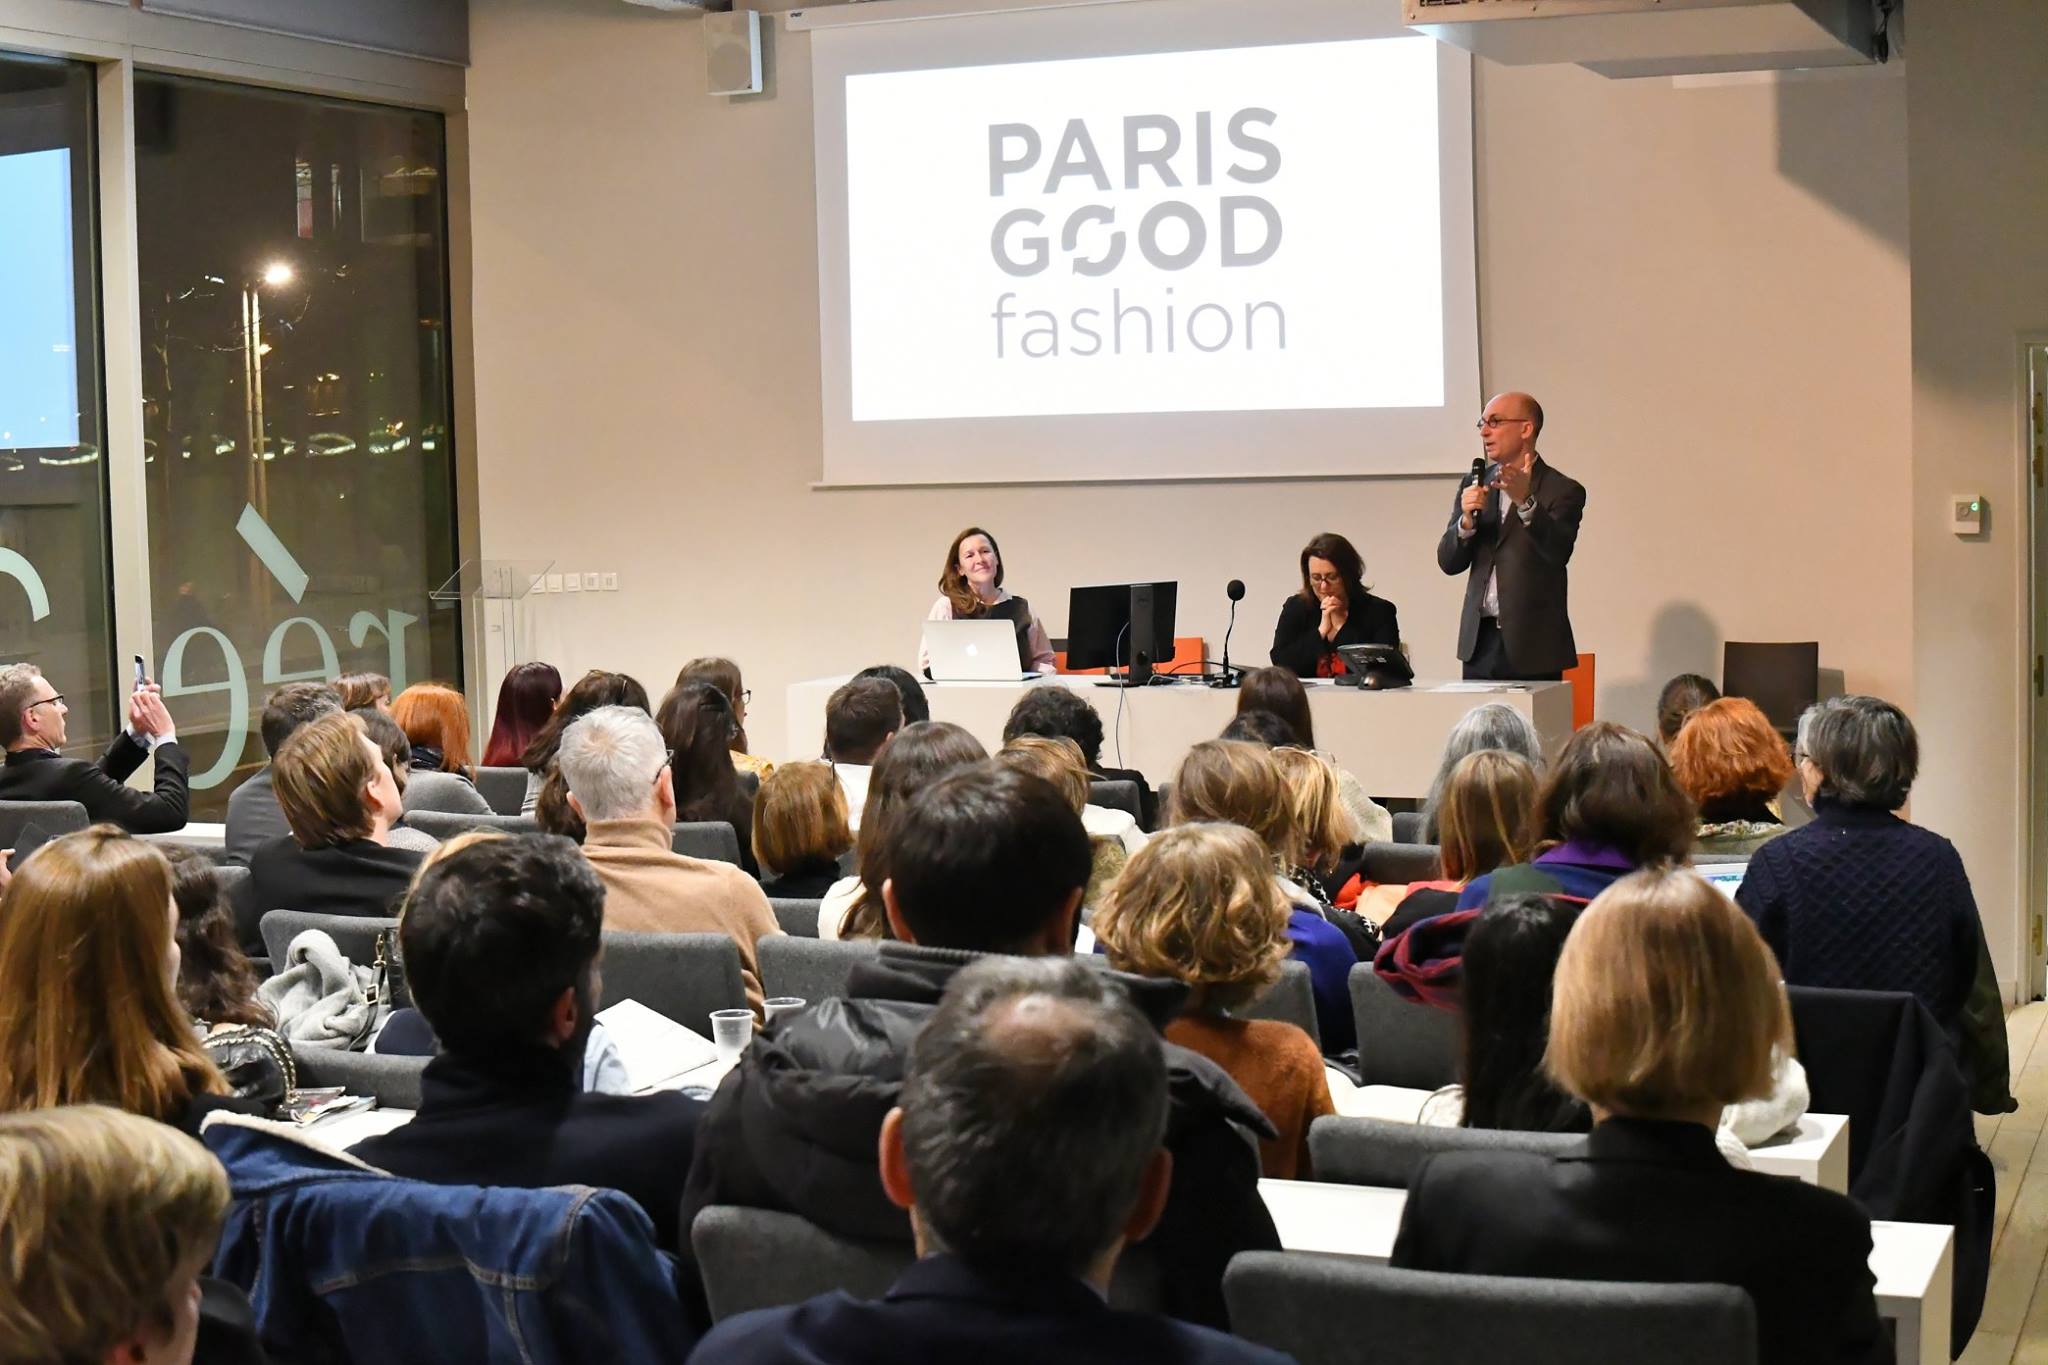 Paris Good Fashion - The New Sustainable Capital of Fashion